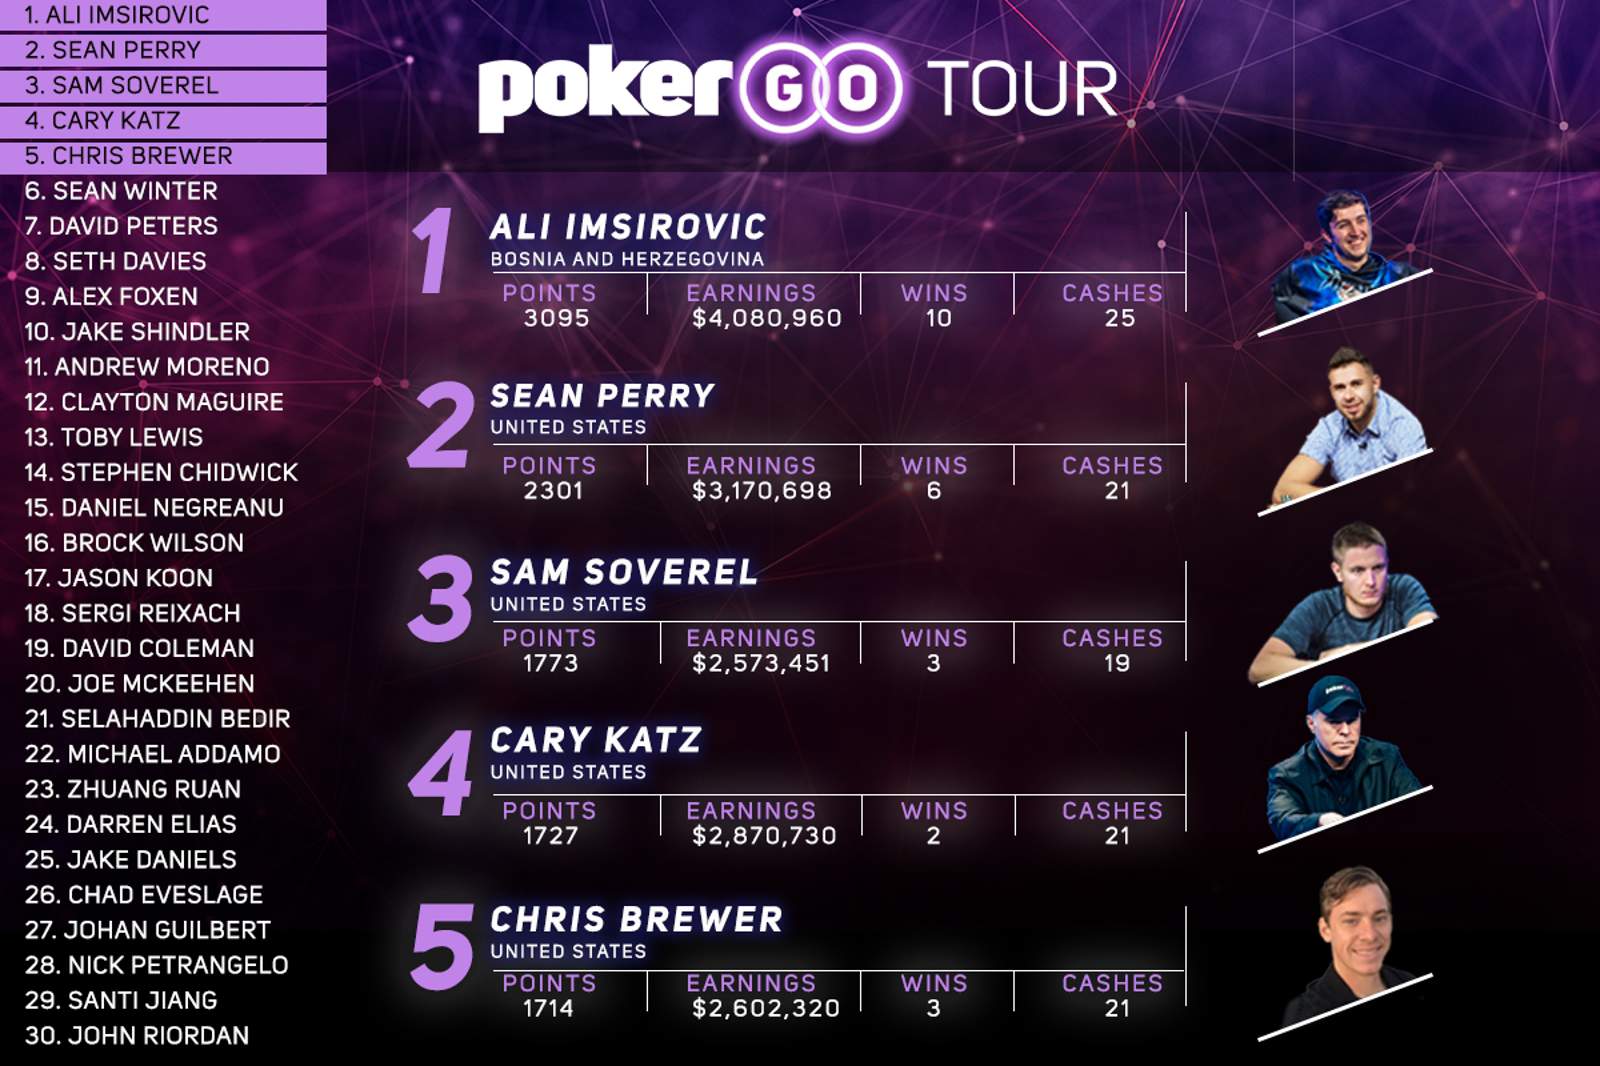 PokerGO Tour Leaderboard Sees Seth Davies, Alex Foxen, and Jake Schindler Enter Top 10